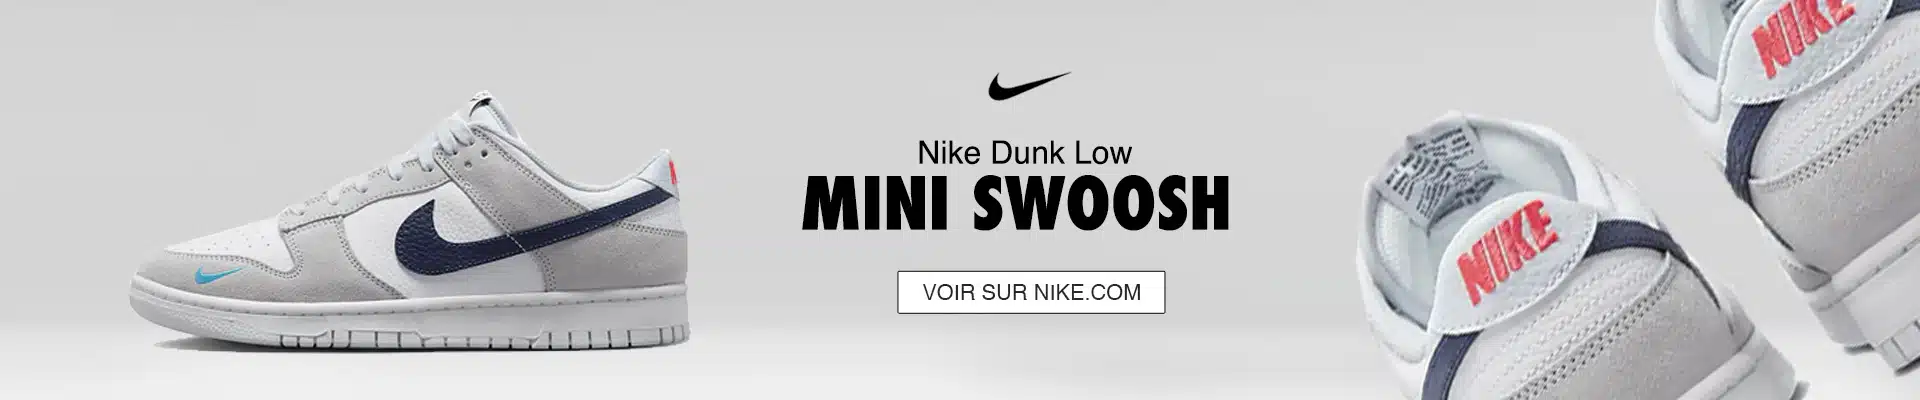 Nike Dunk Low Mini swoosh